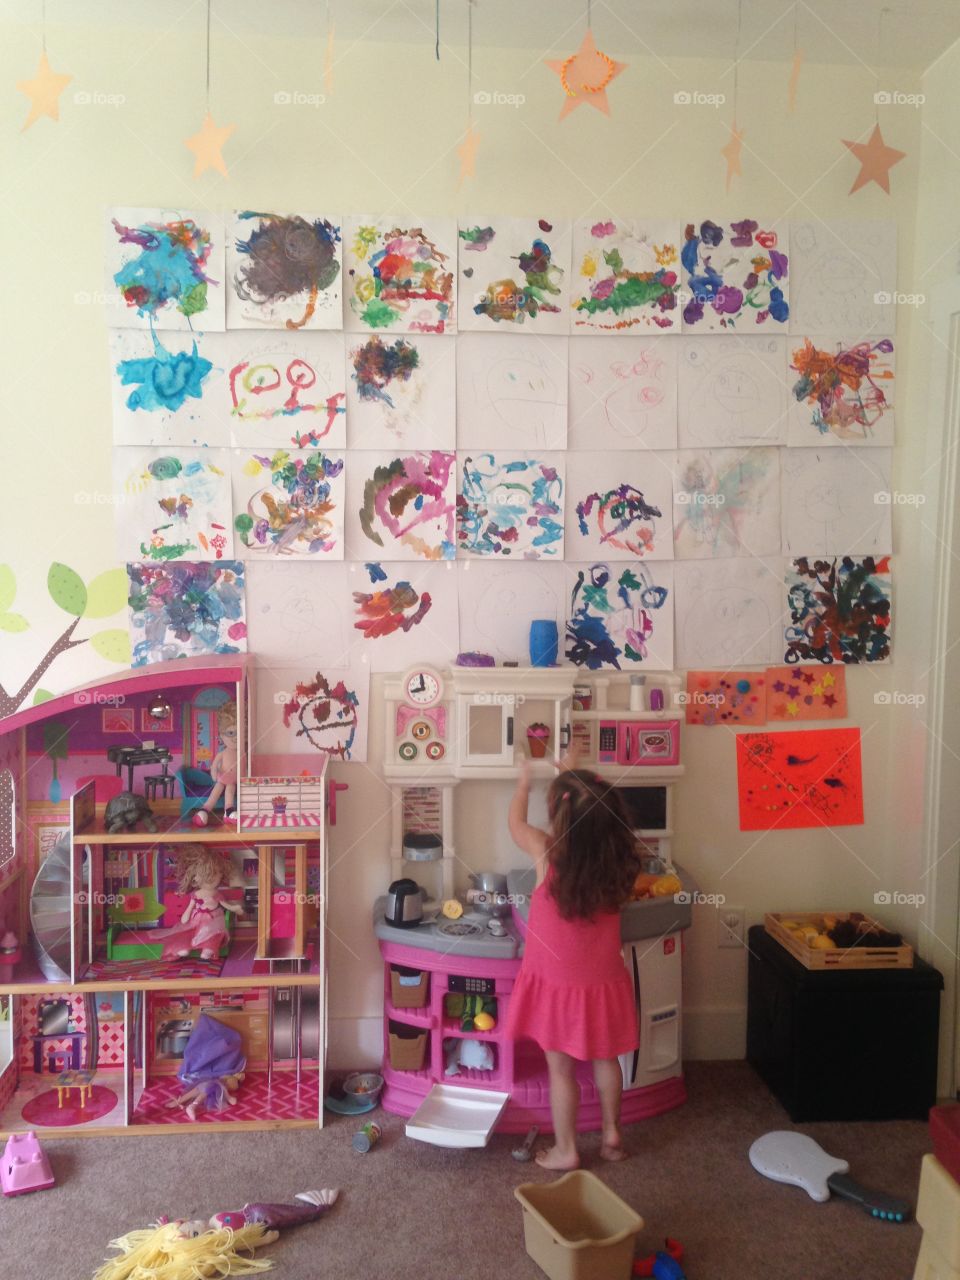 Playroom. My niece in her artwork-covered playroom.